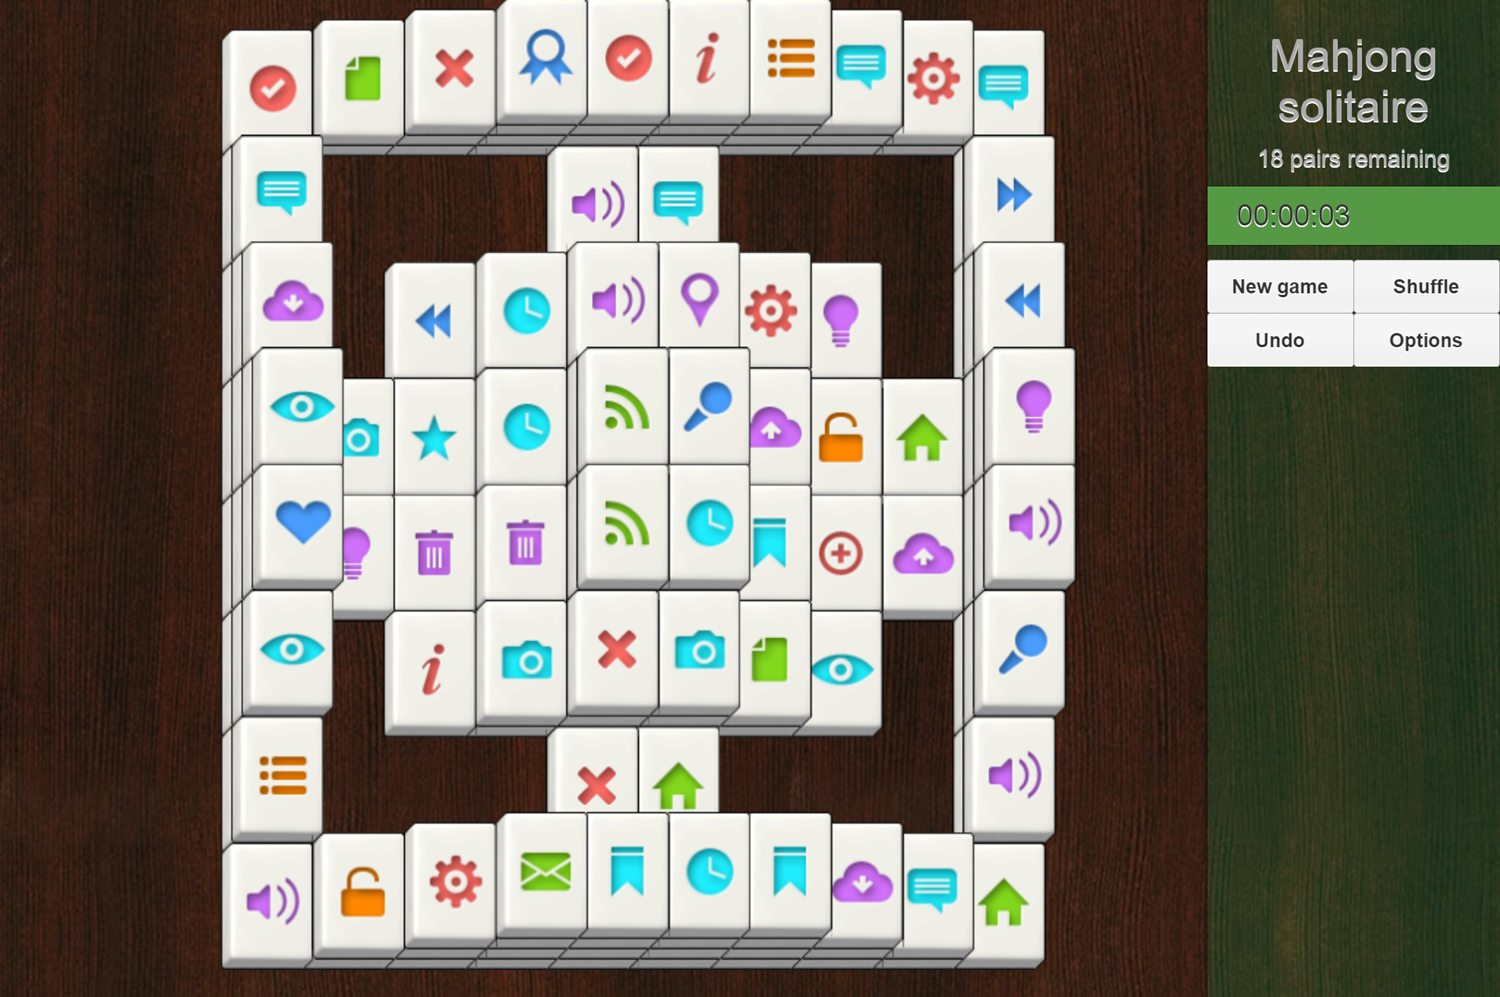 Mahjong Solitaire Wall Game Screenshot.